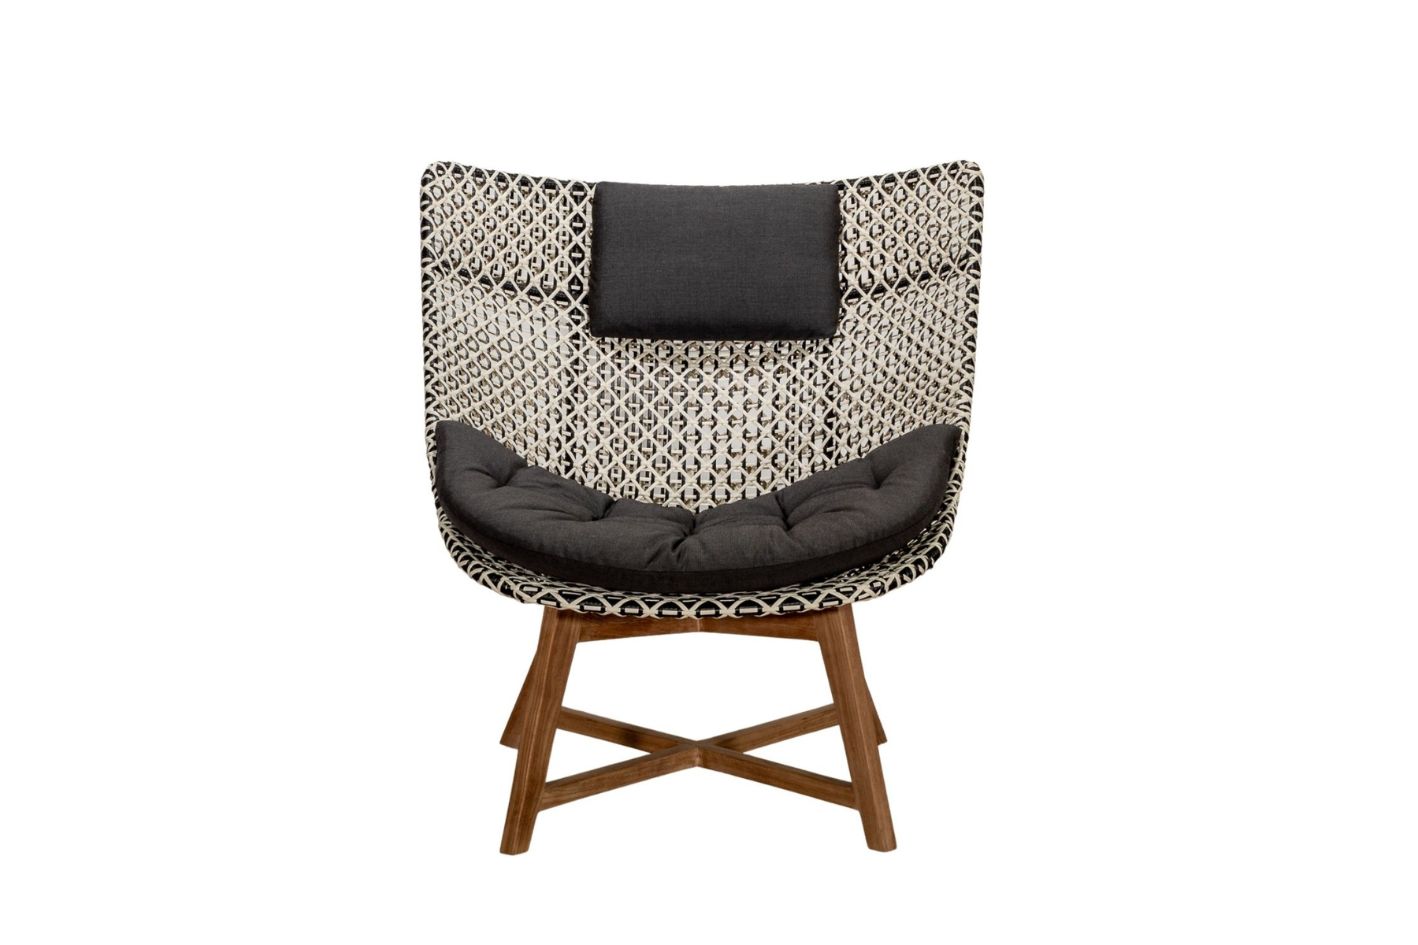 Skal Lounge Chair